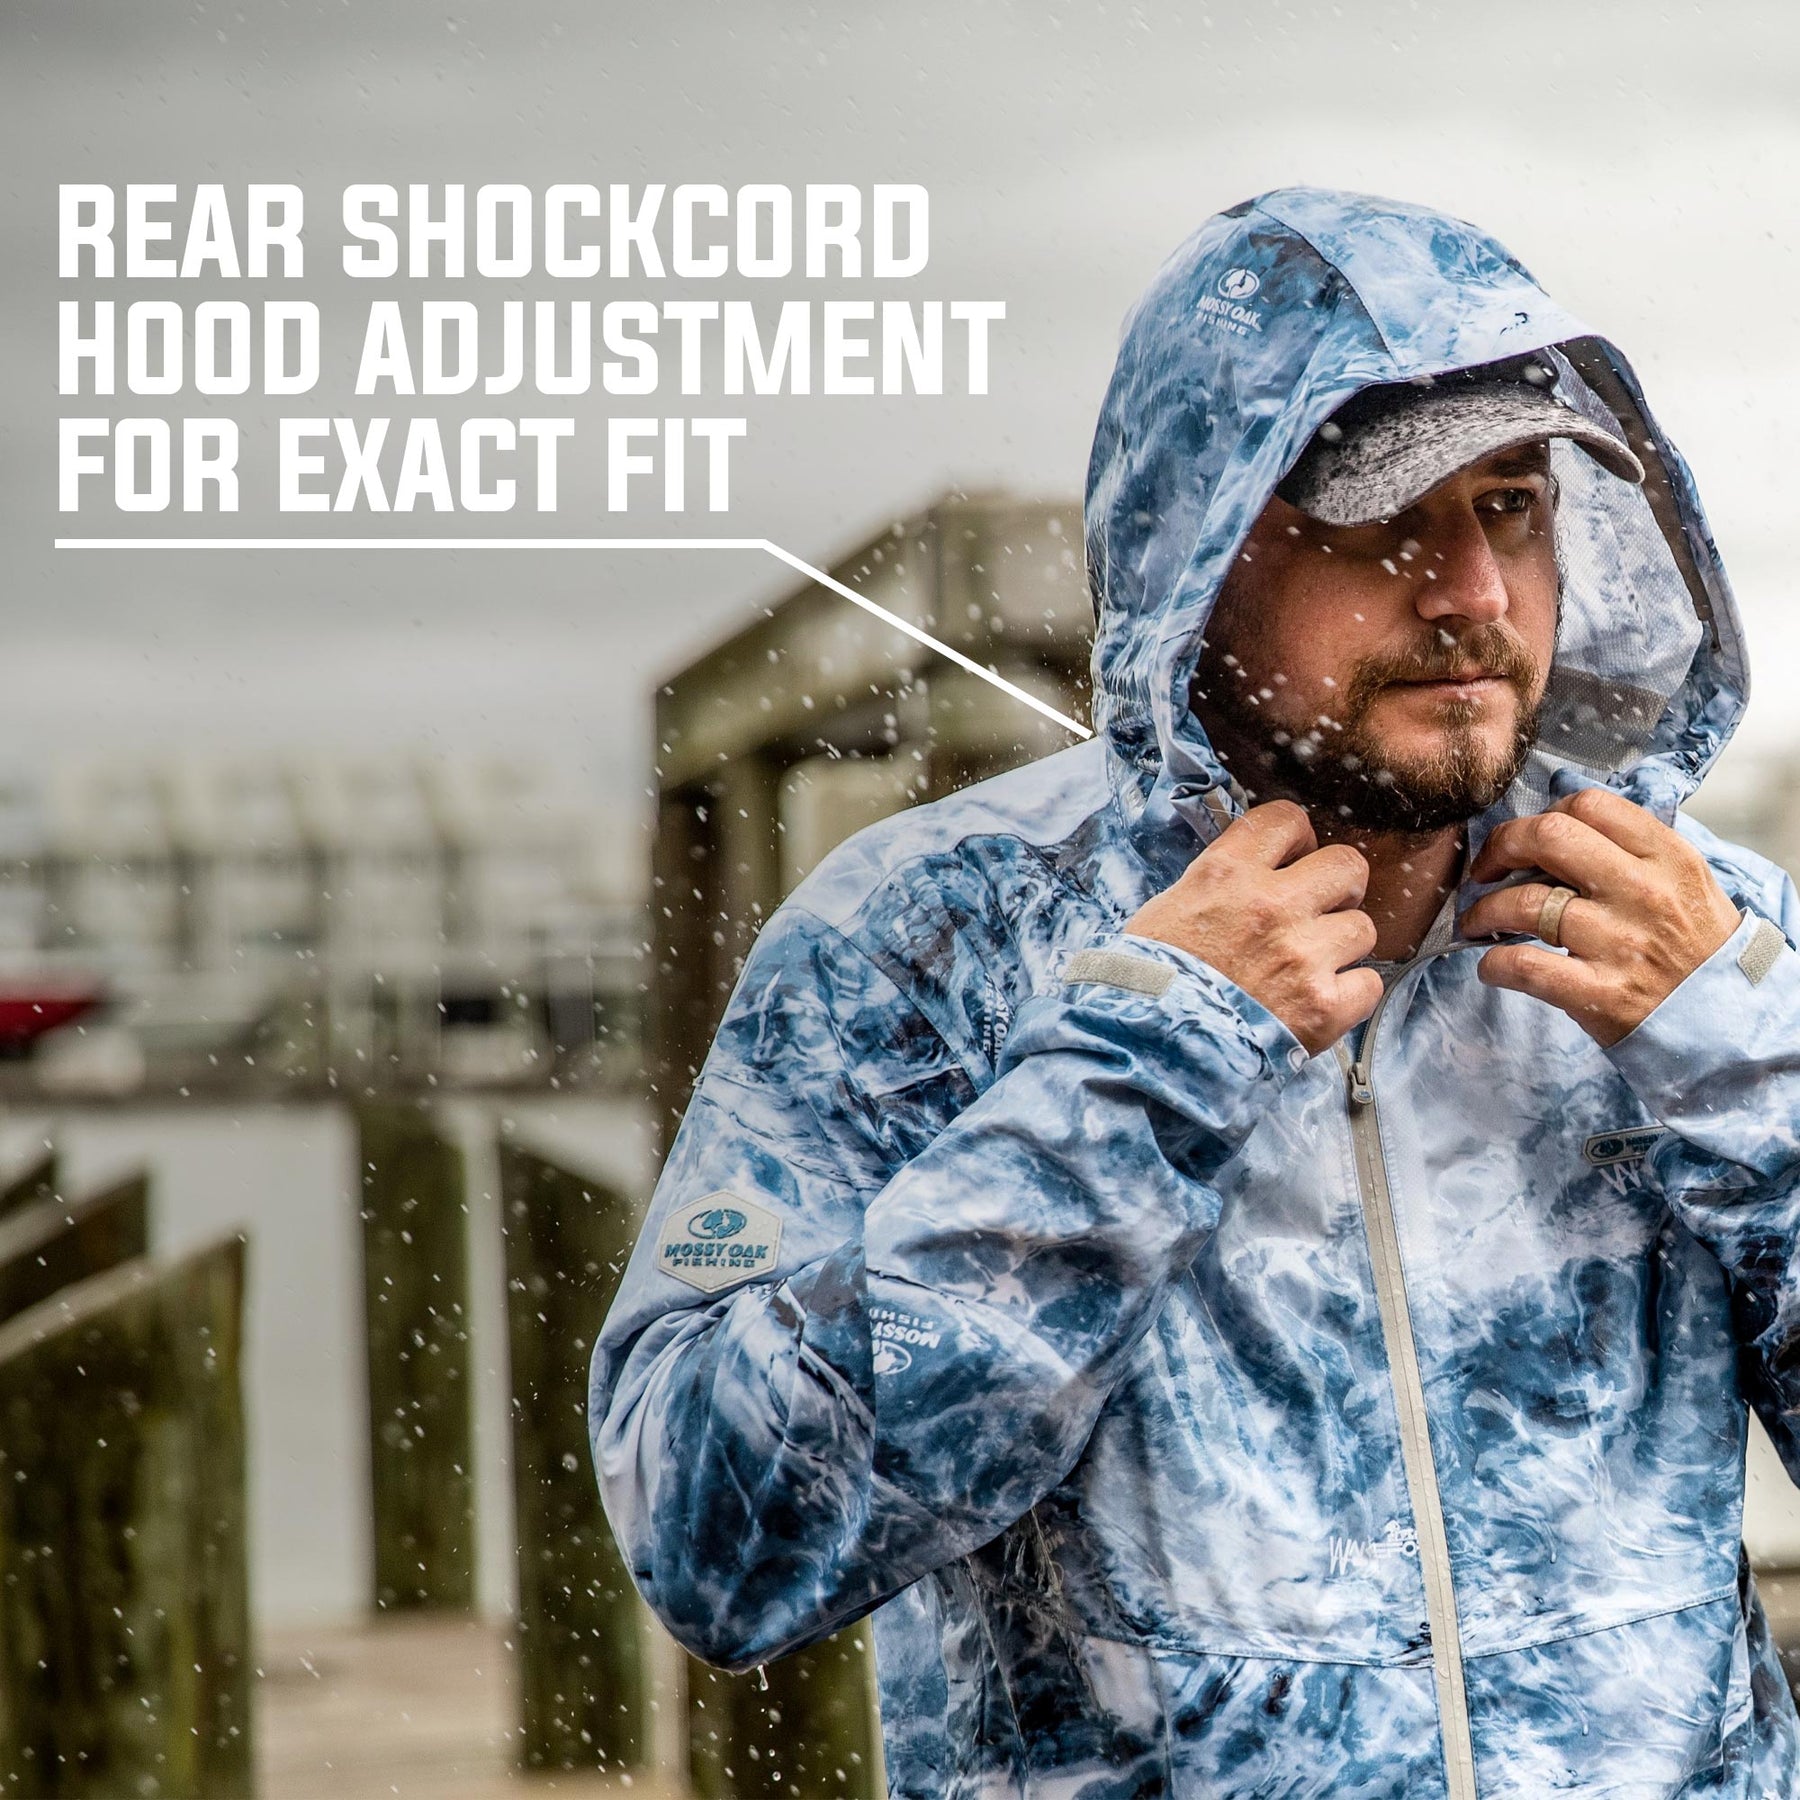 JAEZZIY Rain Suits for Men Women Waterproof Lightweight Hooded Breathable Rain  Gear Raincoat for Fishing Hiking Cycling (Grey L) - Yahoo Shopping